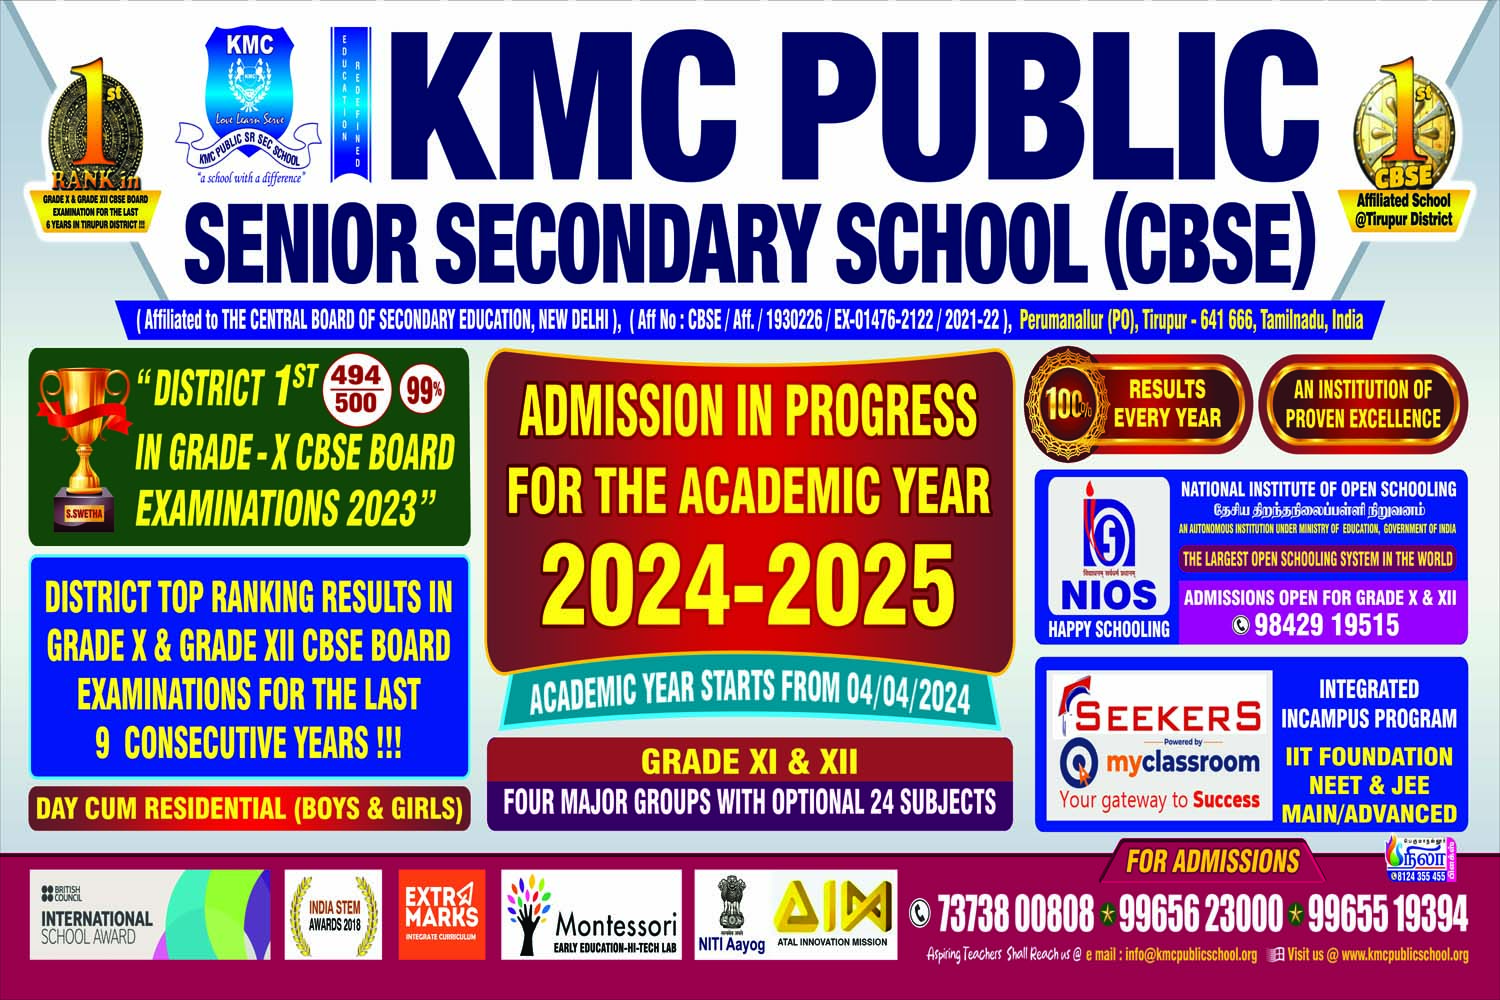 KMC Public School